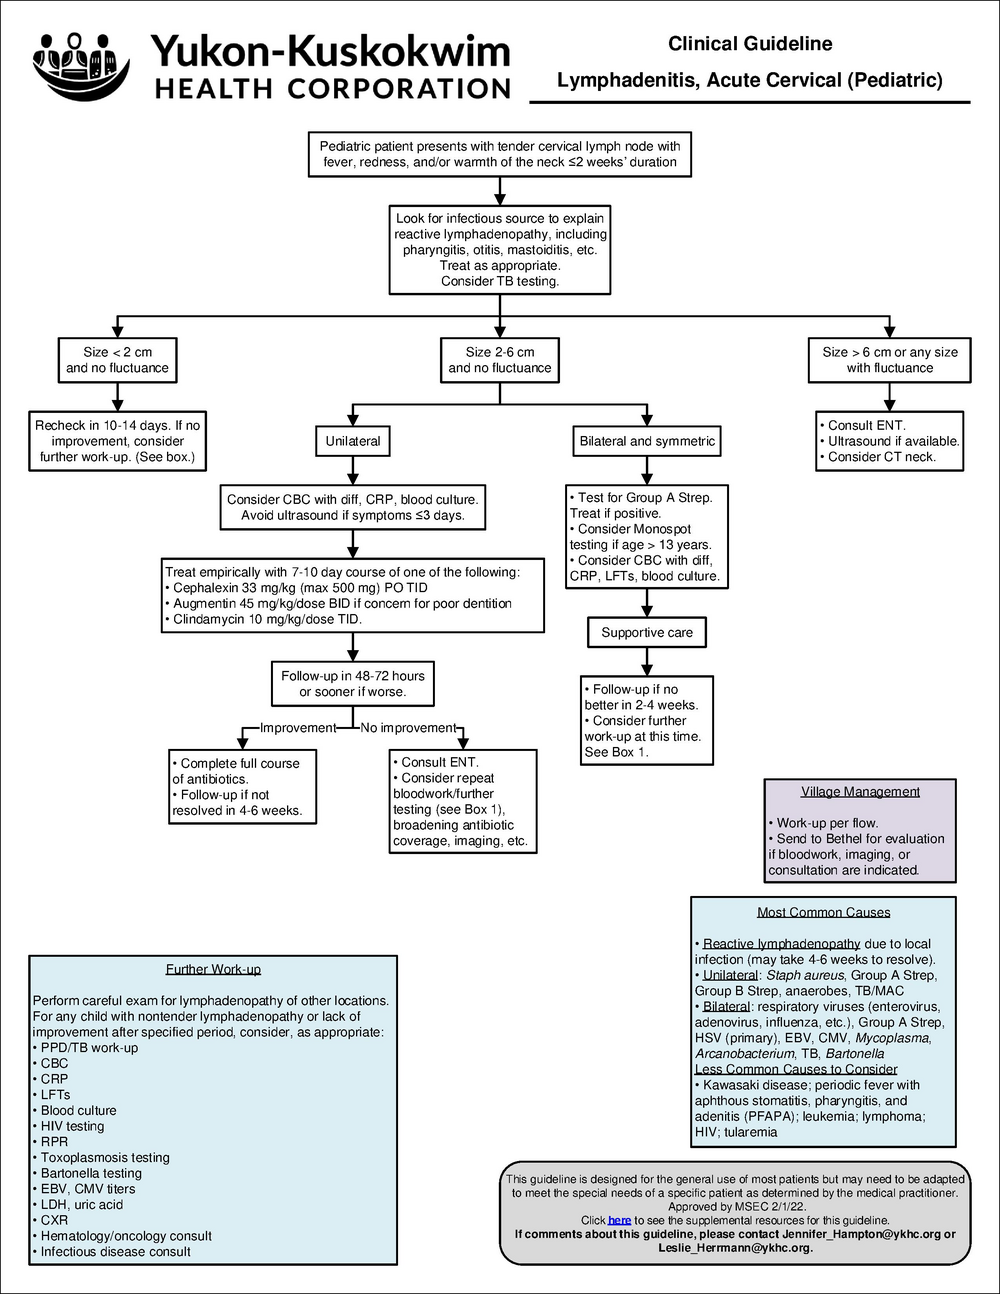 Cervical lymphadenitis peds.pdf